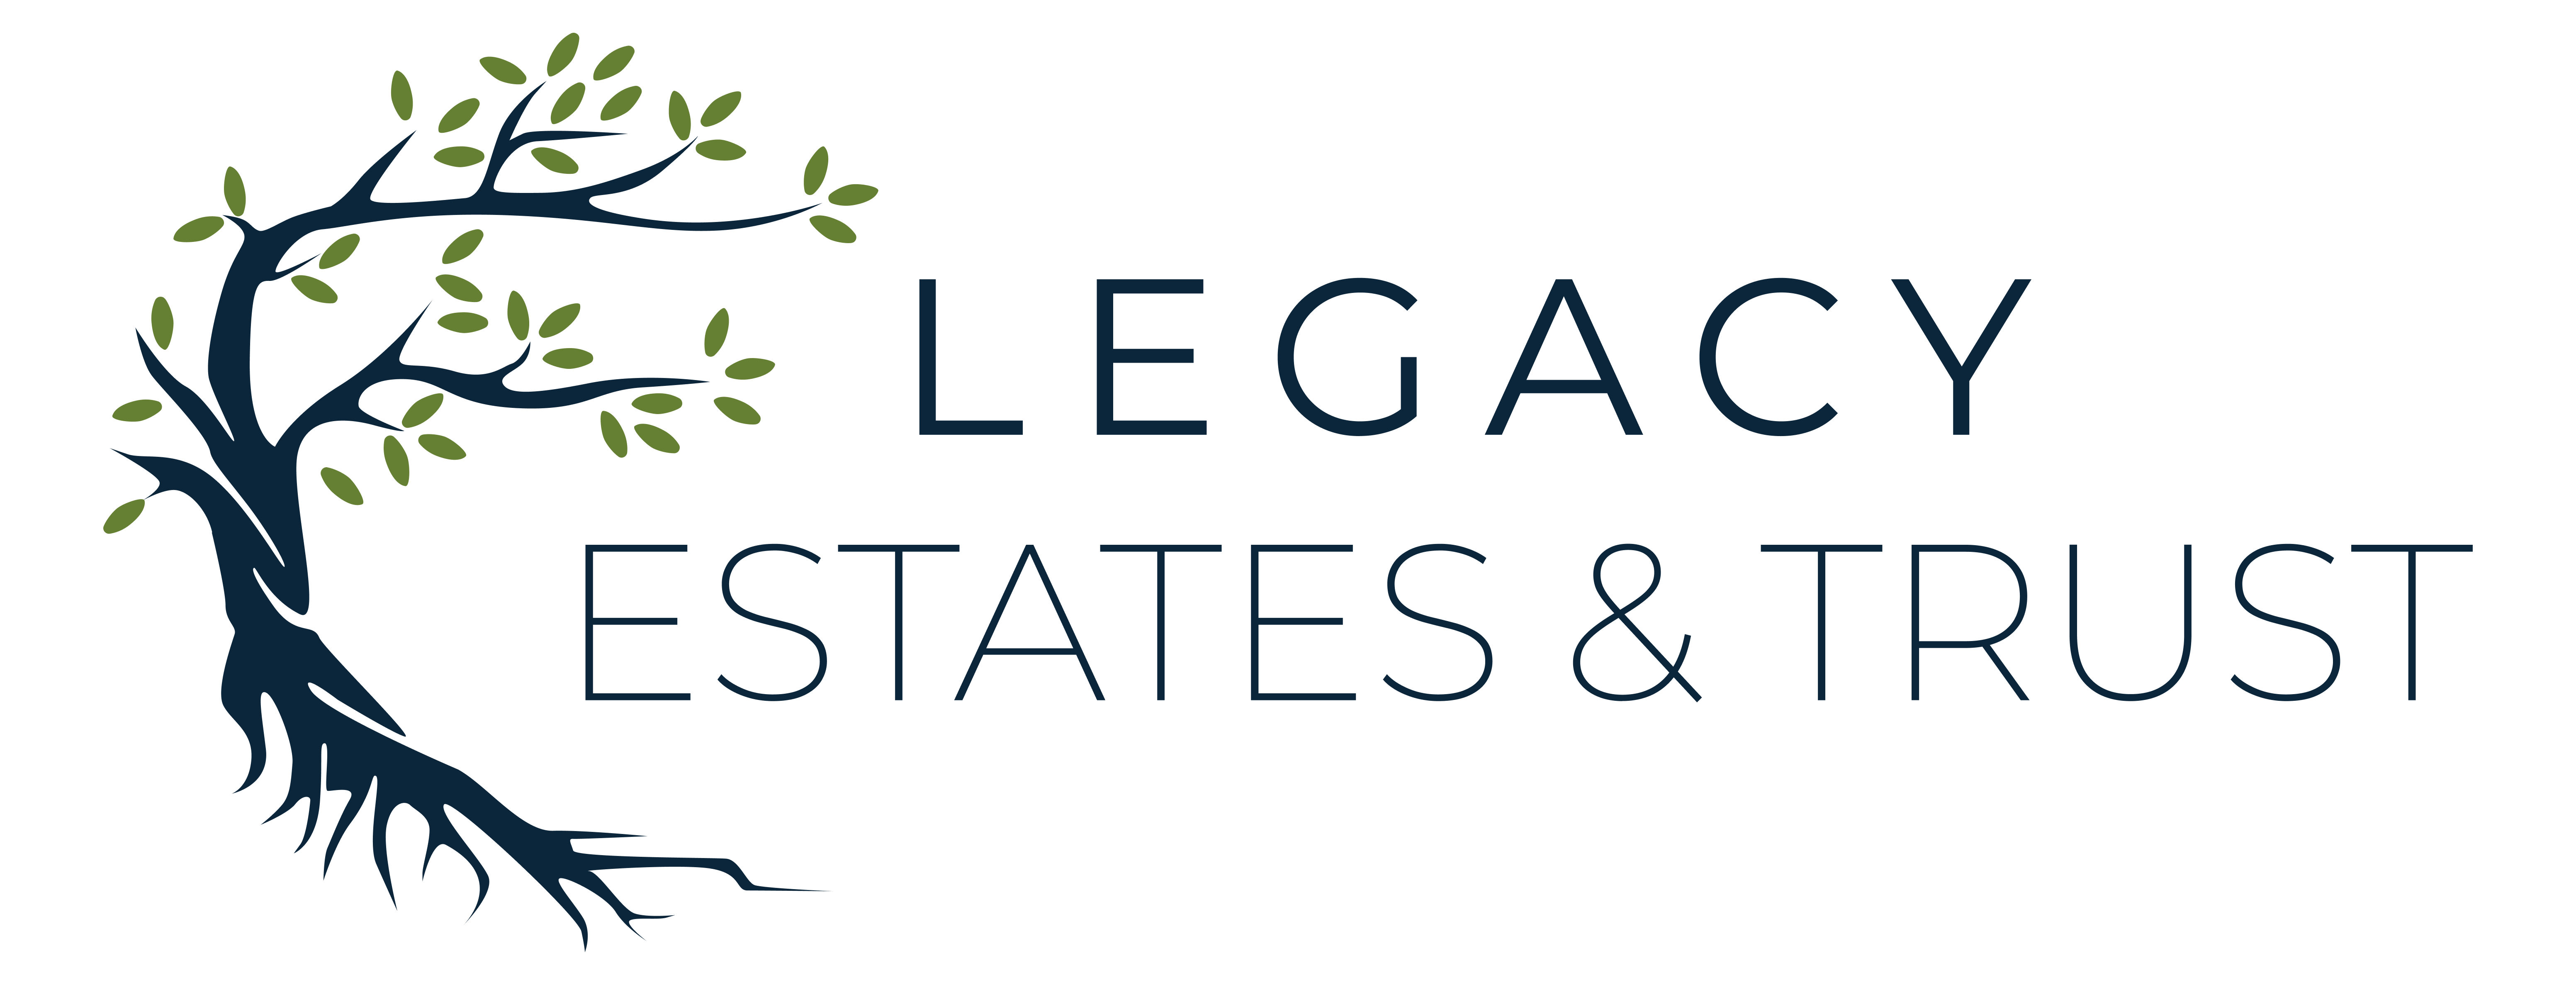 Legacy Estates Trust LOGO HORIZONTAL color